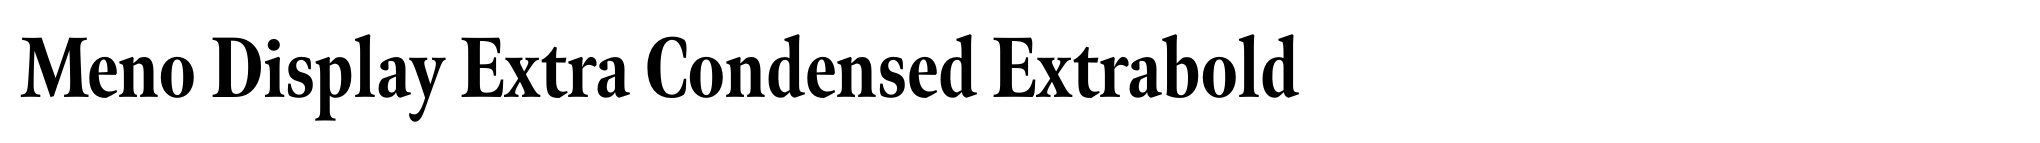 Meno Display Extra Condensed Extrabold image